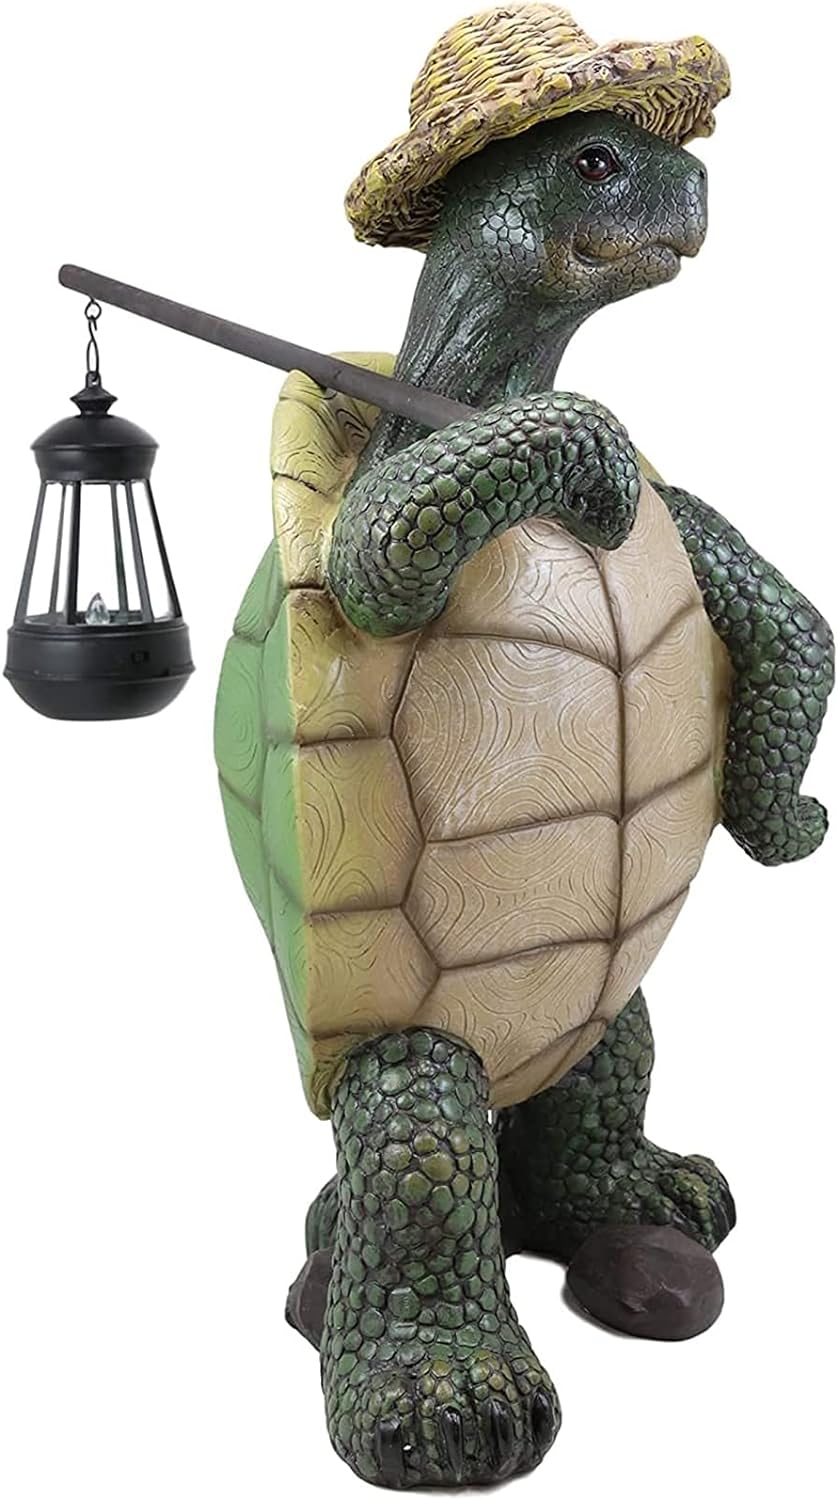 Turtle Garden Figure, Small Resin Turtle Statue, Adventure Hiking Turtle Statue, Art Turtle Ornament for Office Home Yard Lawn Garden Decoration Single Turtle 17 x 7 x 6 cm (7 x 3 x 2 inches)